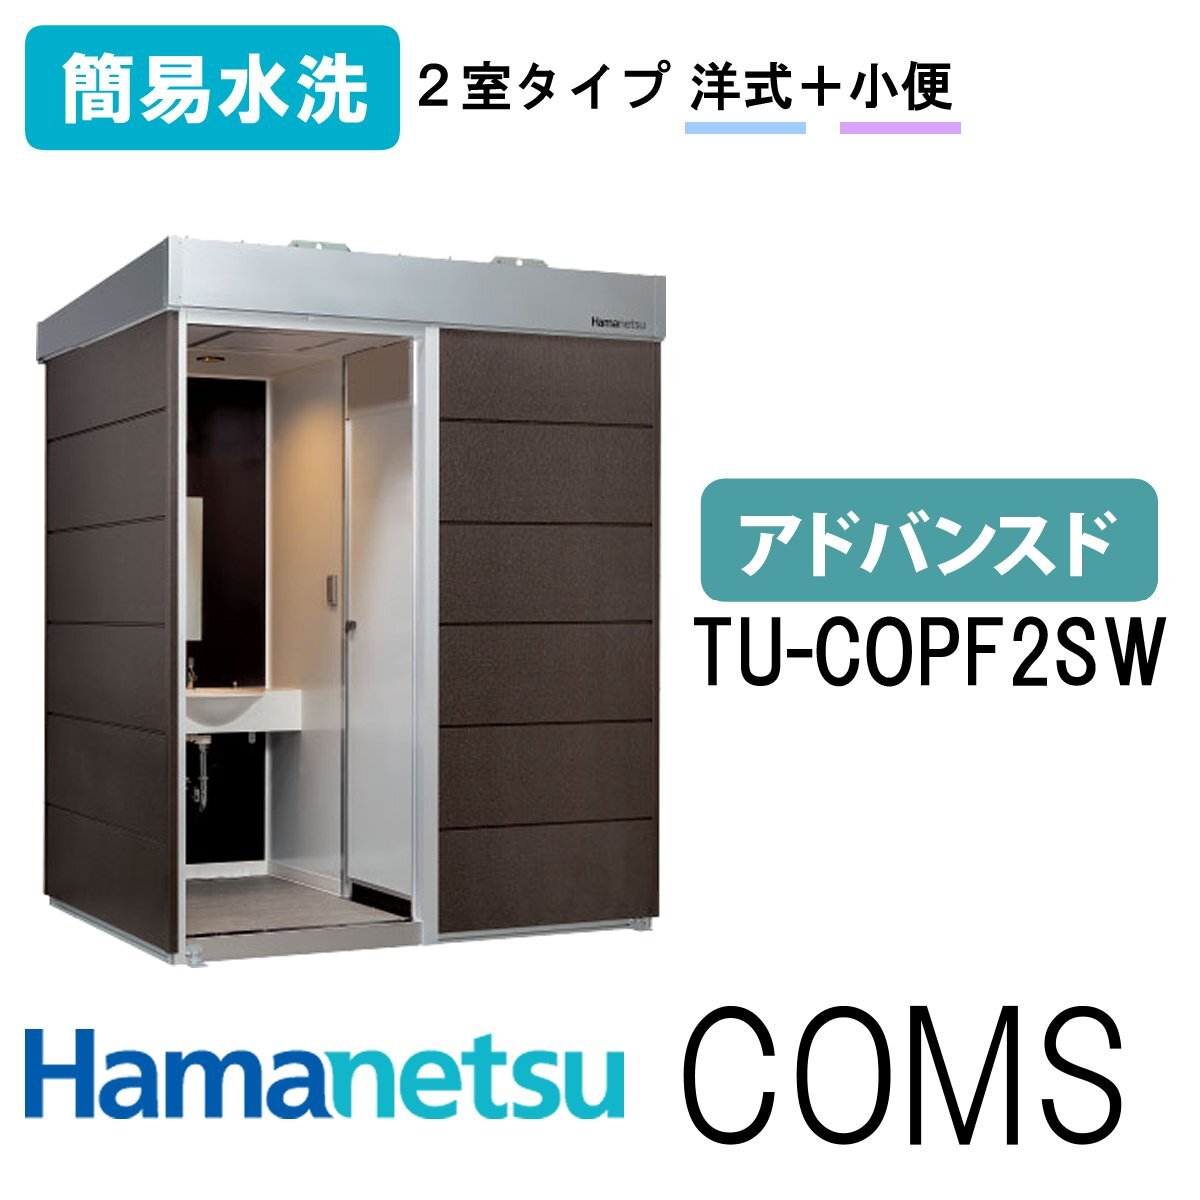  is manetsu outdoors toilet COMSplus com z toilet plus TU-COPF2SW simple flushing advance do